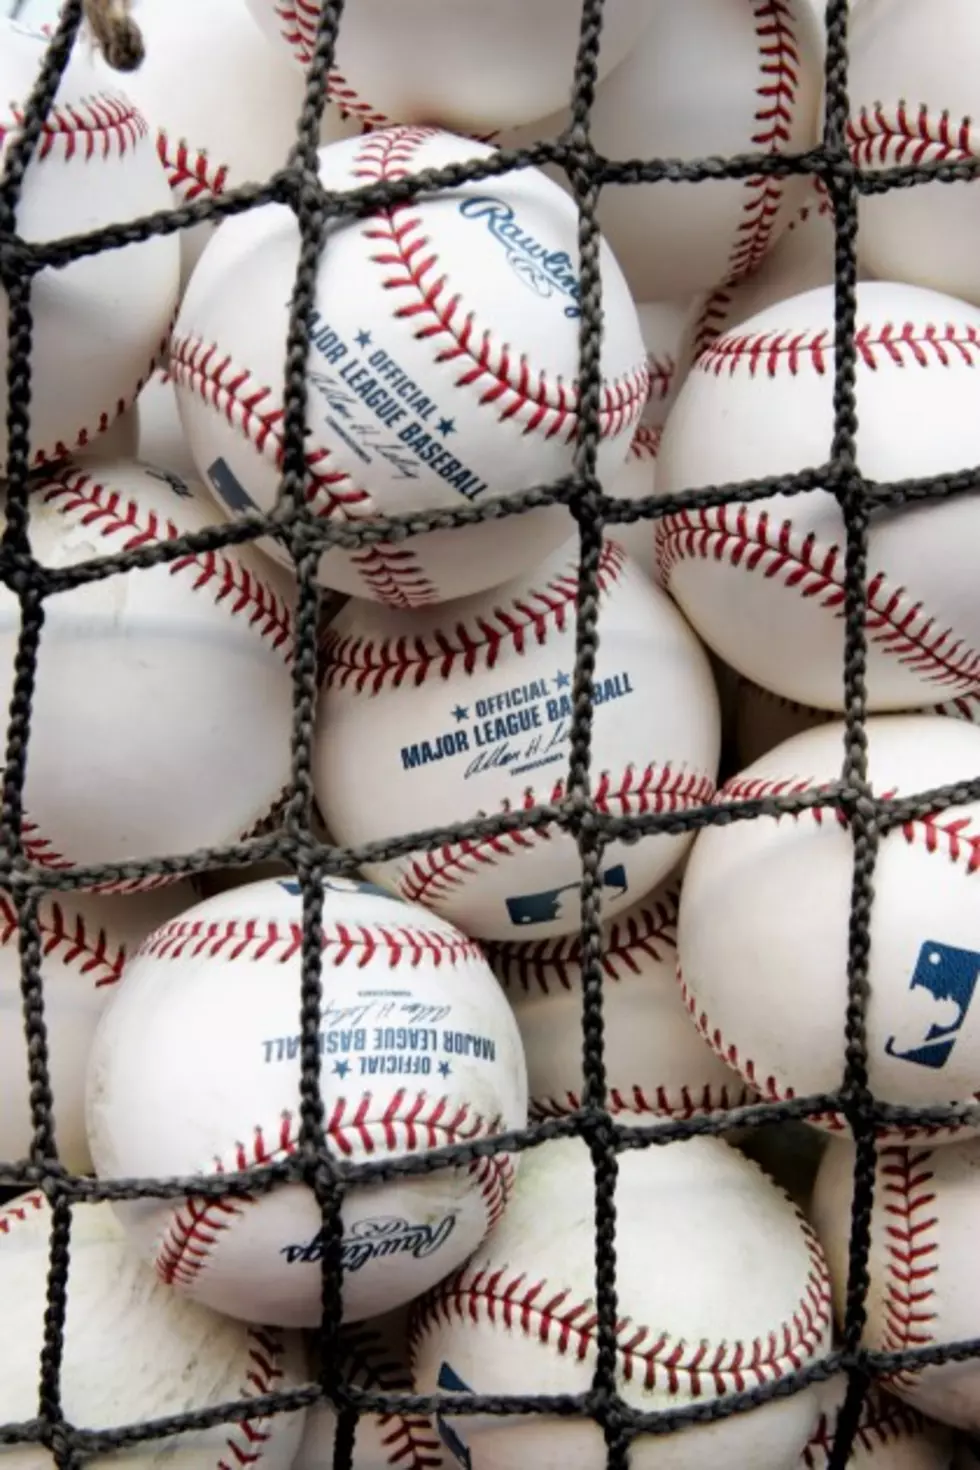 West Coast League Baseball Starting Up Operations in Yakima [AUDIO]